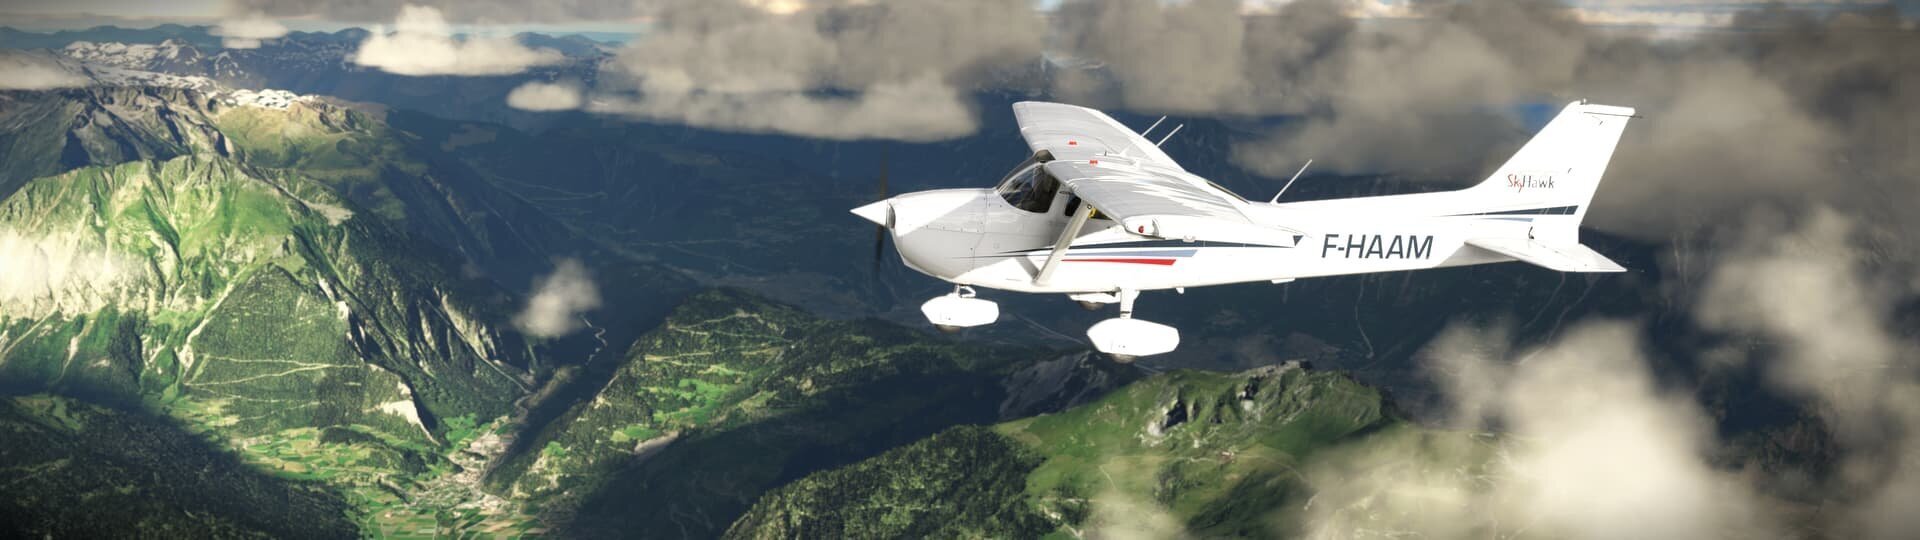 http://image.noelshack.com/fichiers/2023/23/3/1686127169-microsoft-flight-simulator-screenshot-2023-06-05-22-55-36-30.jpg